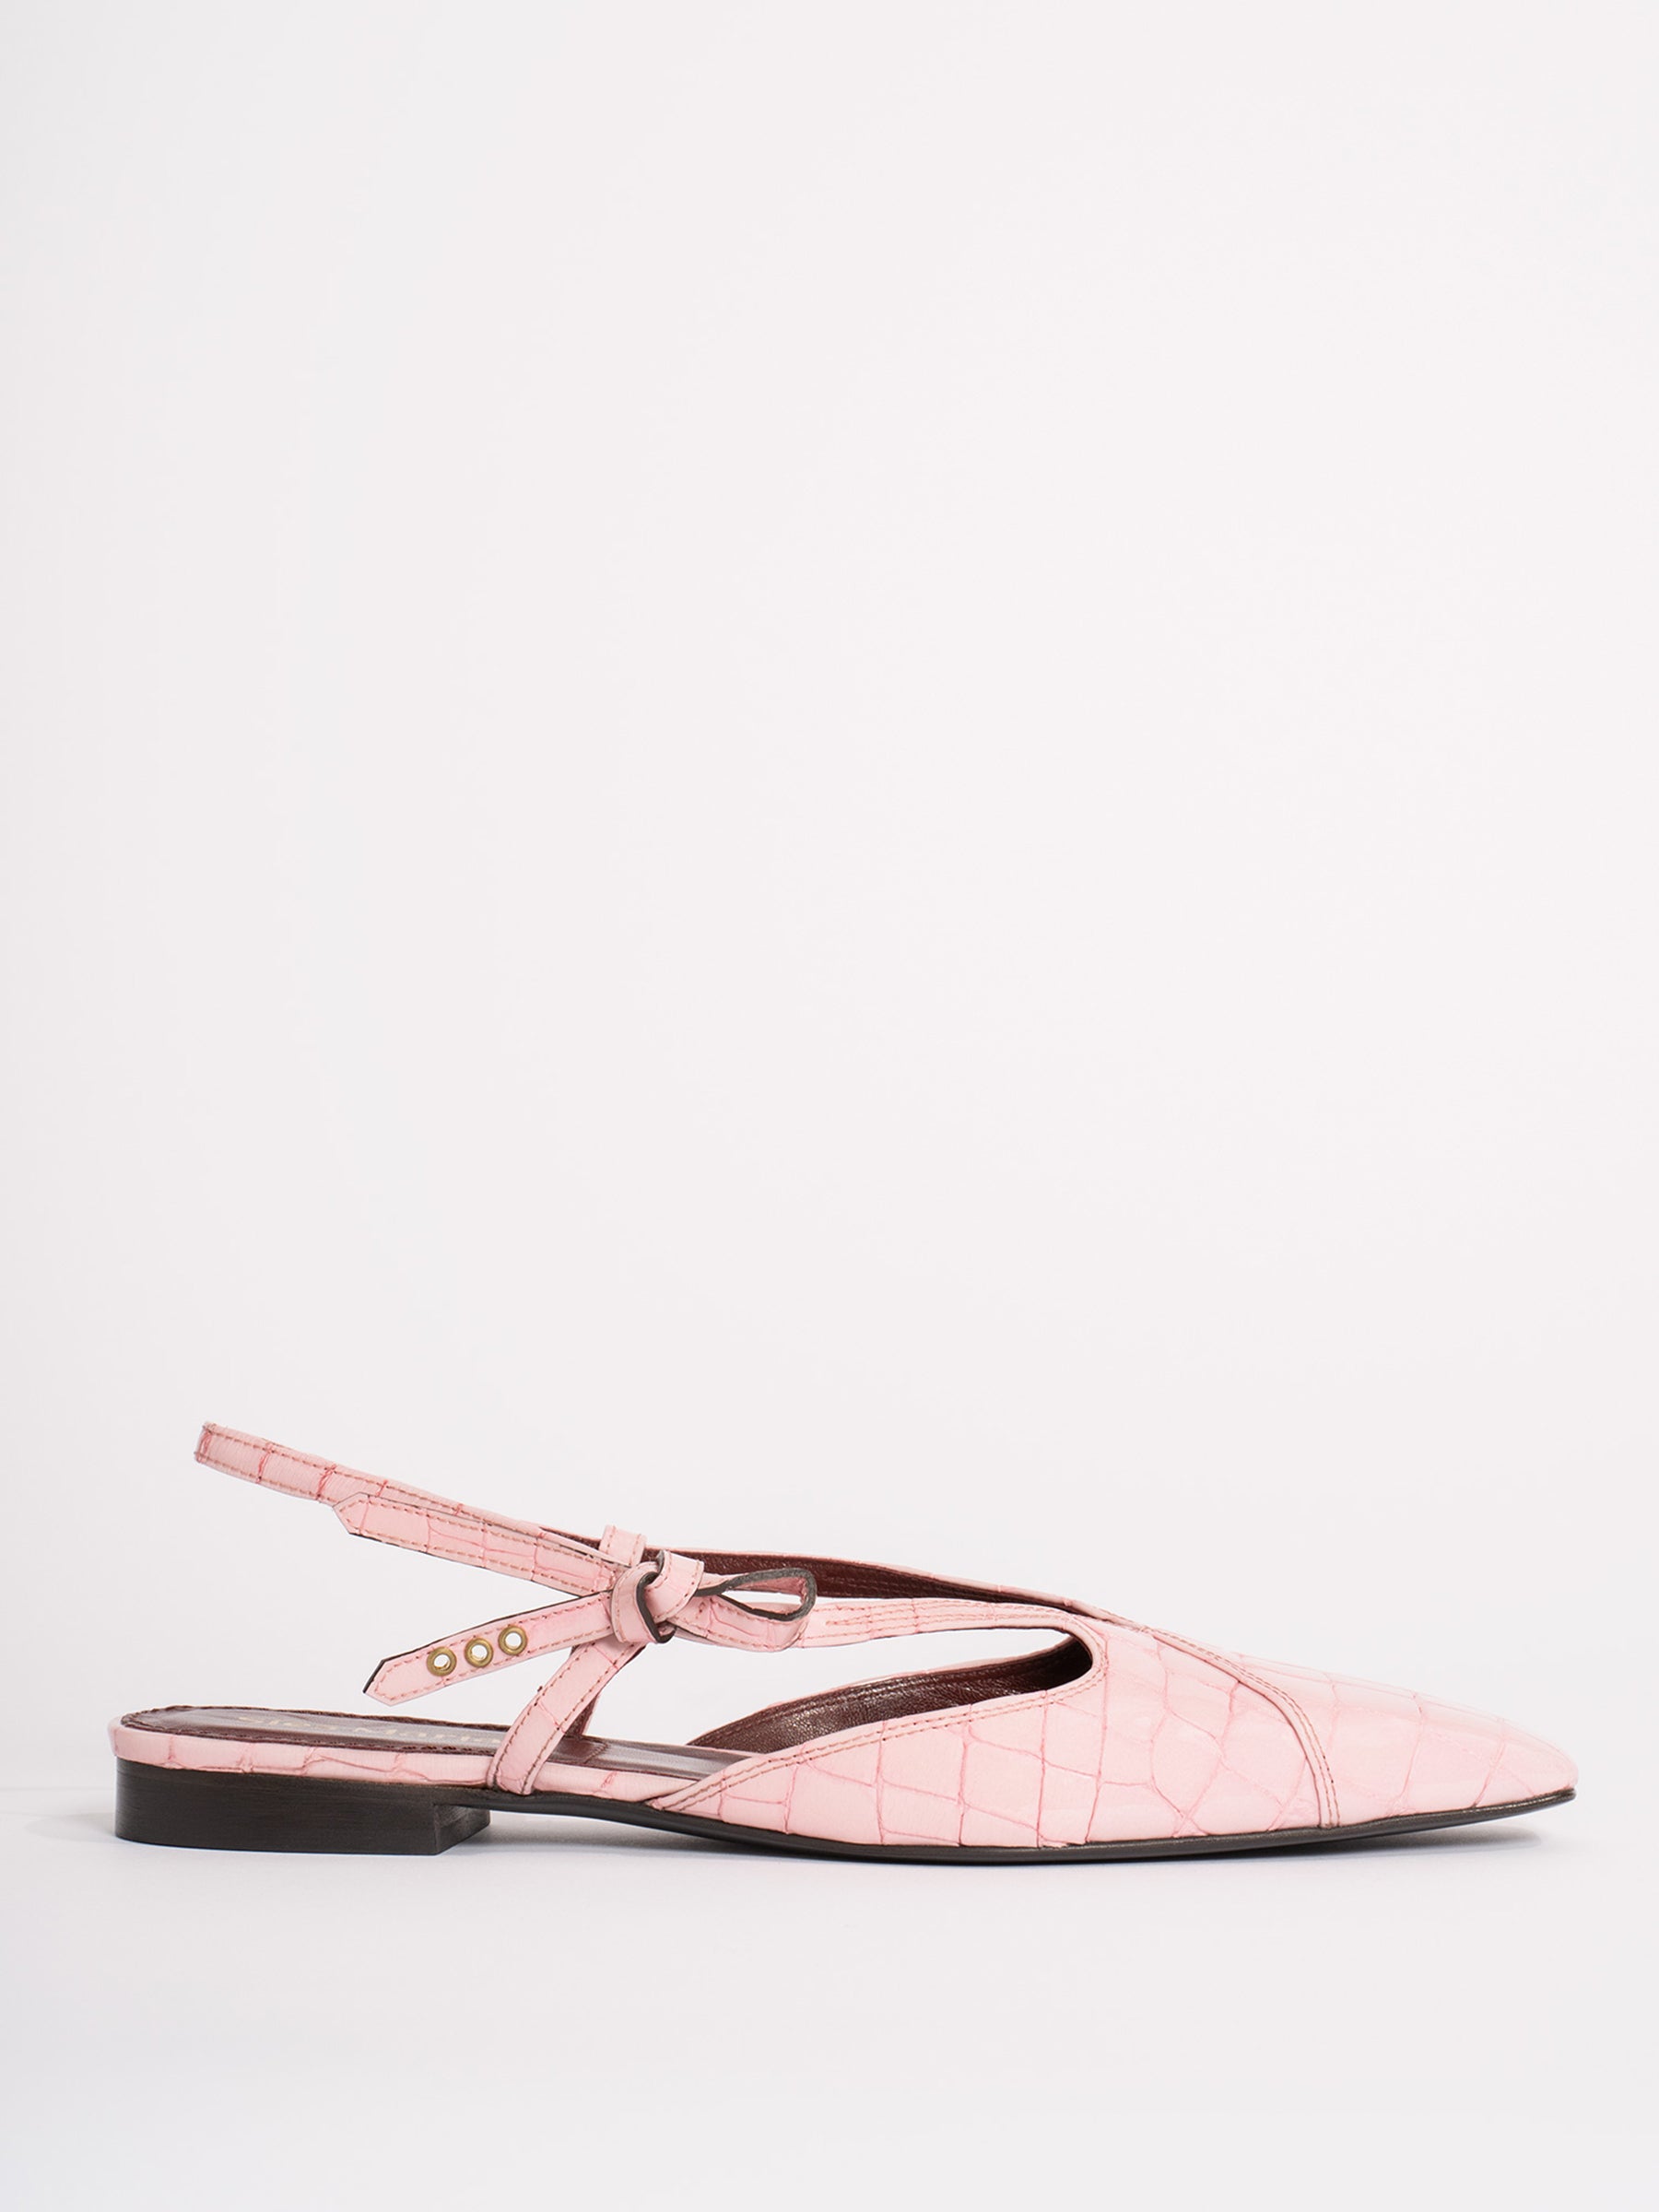 Sies Marjan - Anika Patent Croco Flat - Pink - Women's Shoes & Accessories